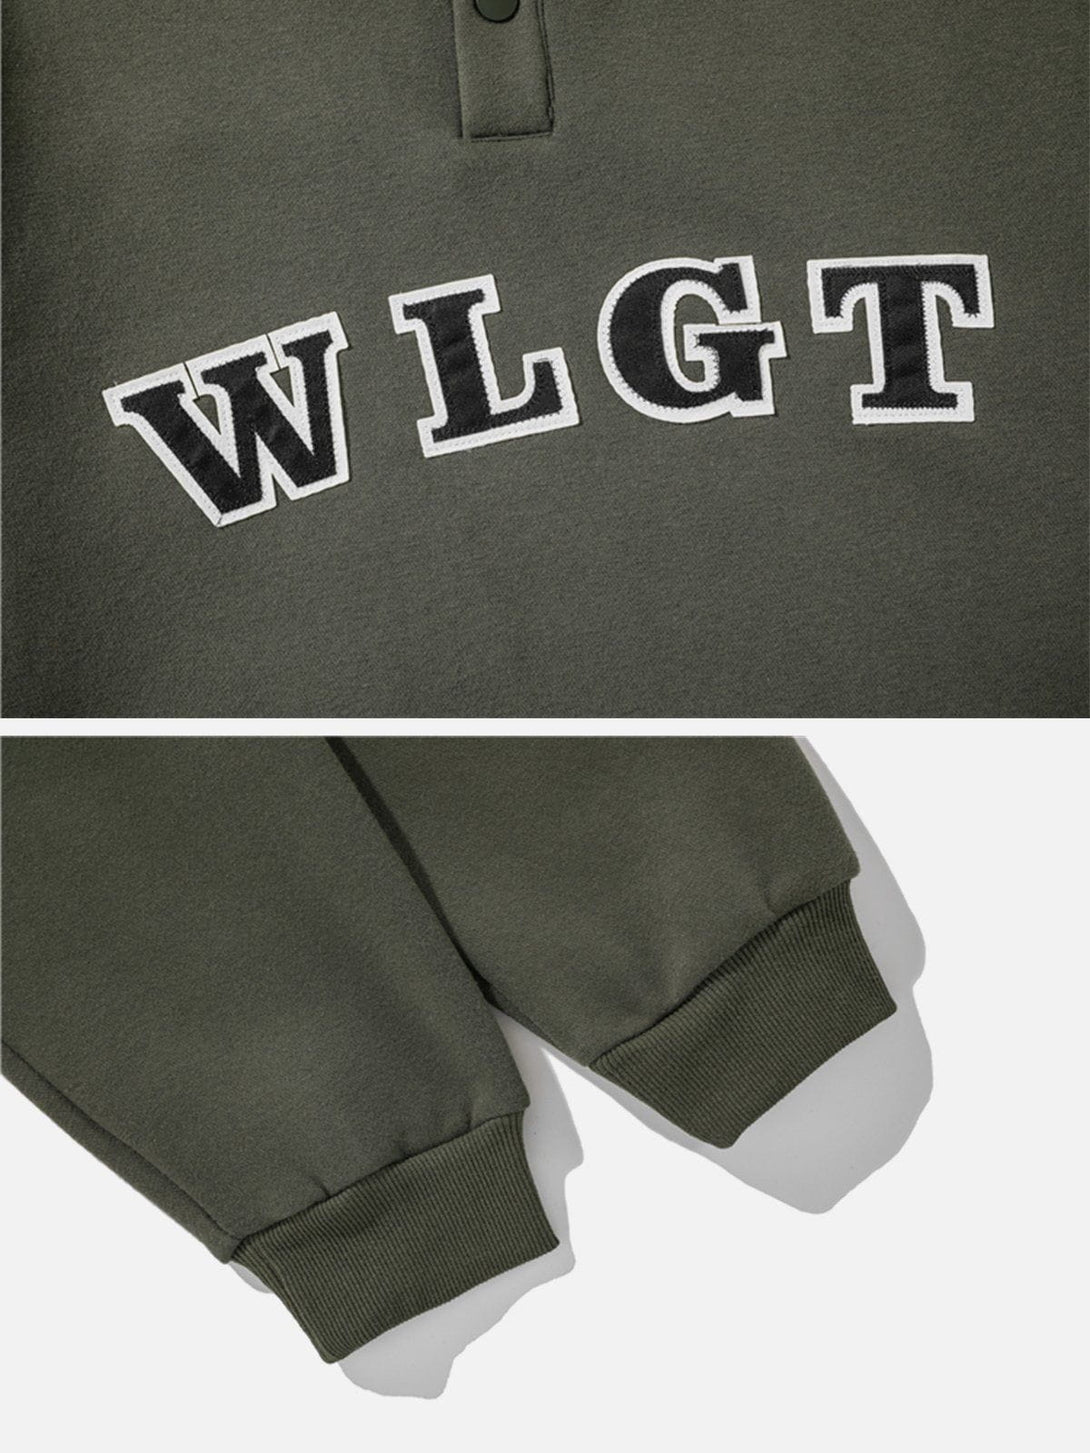 Majesda® - WLGT Labeling Sweatshirt outfit ideas streetwear fashion